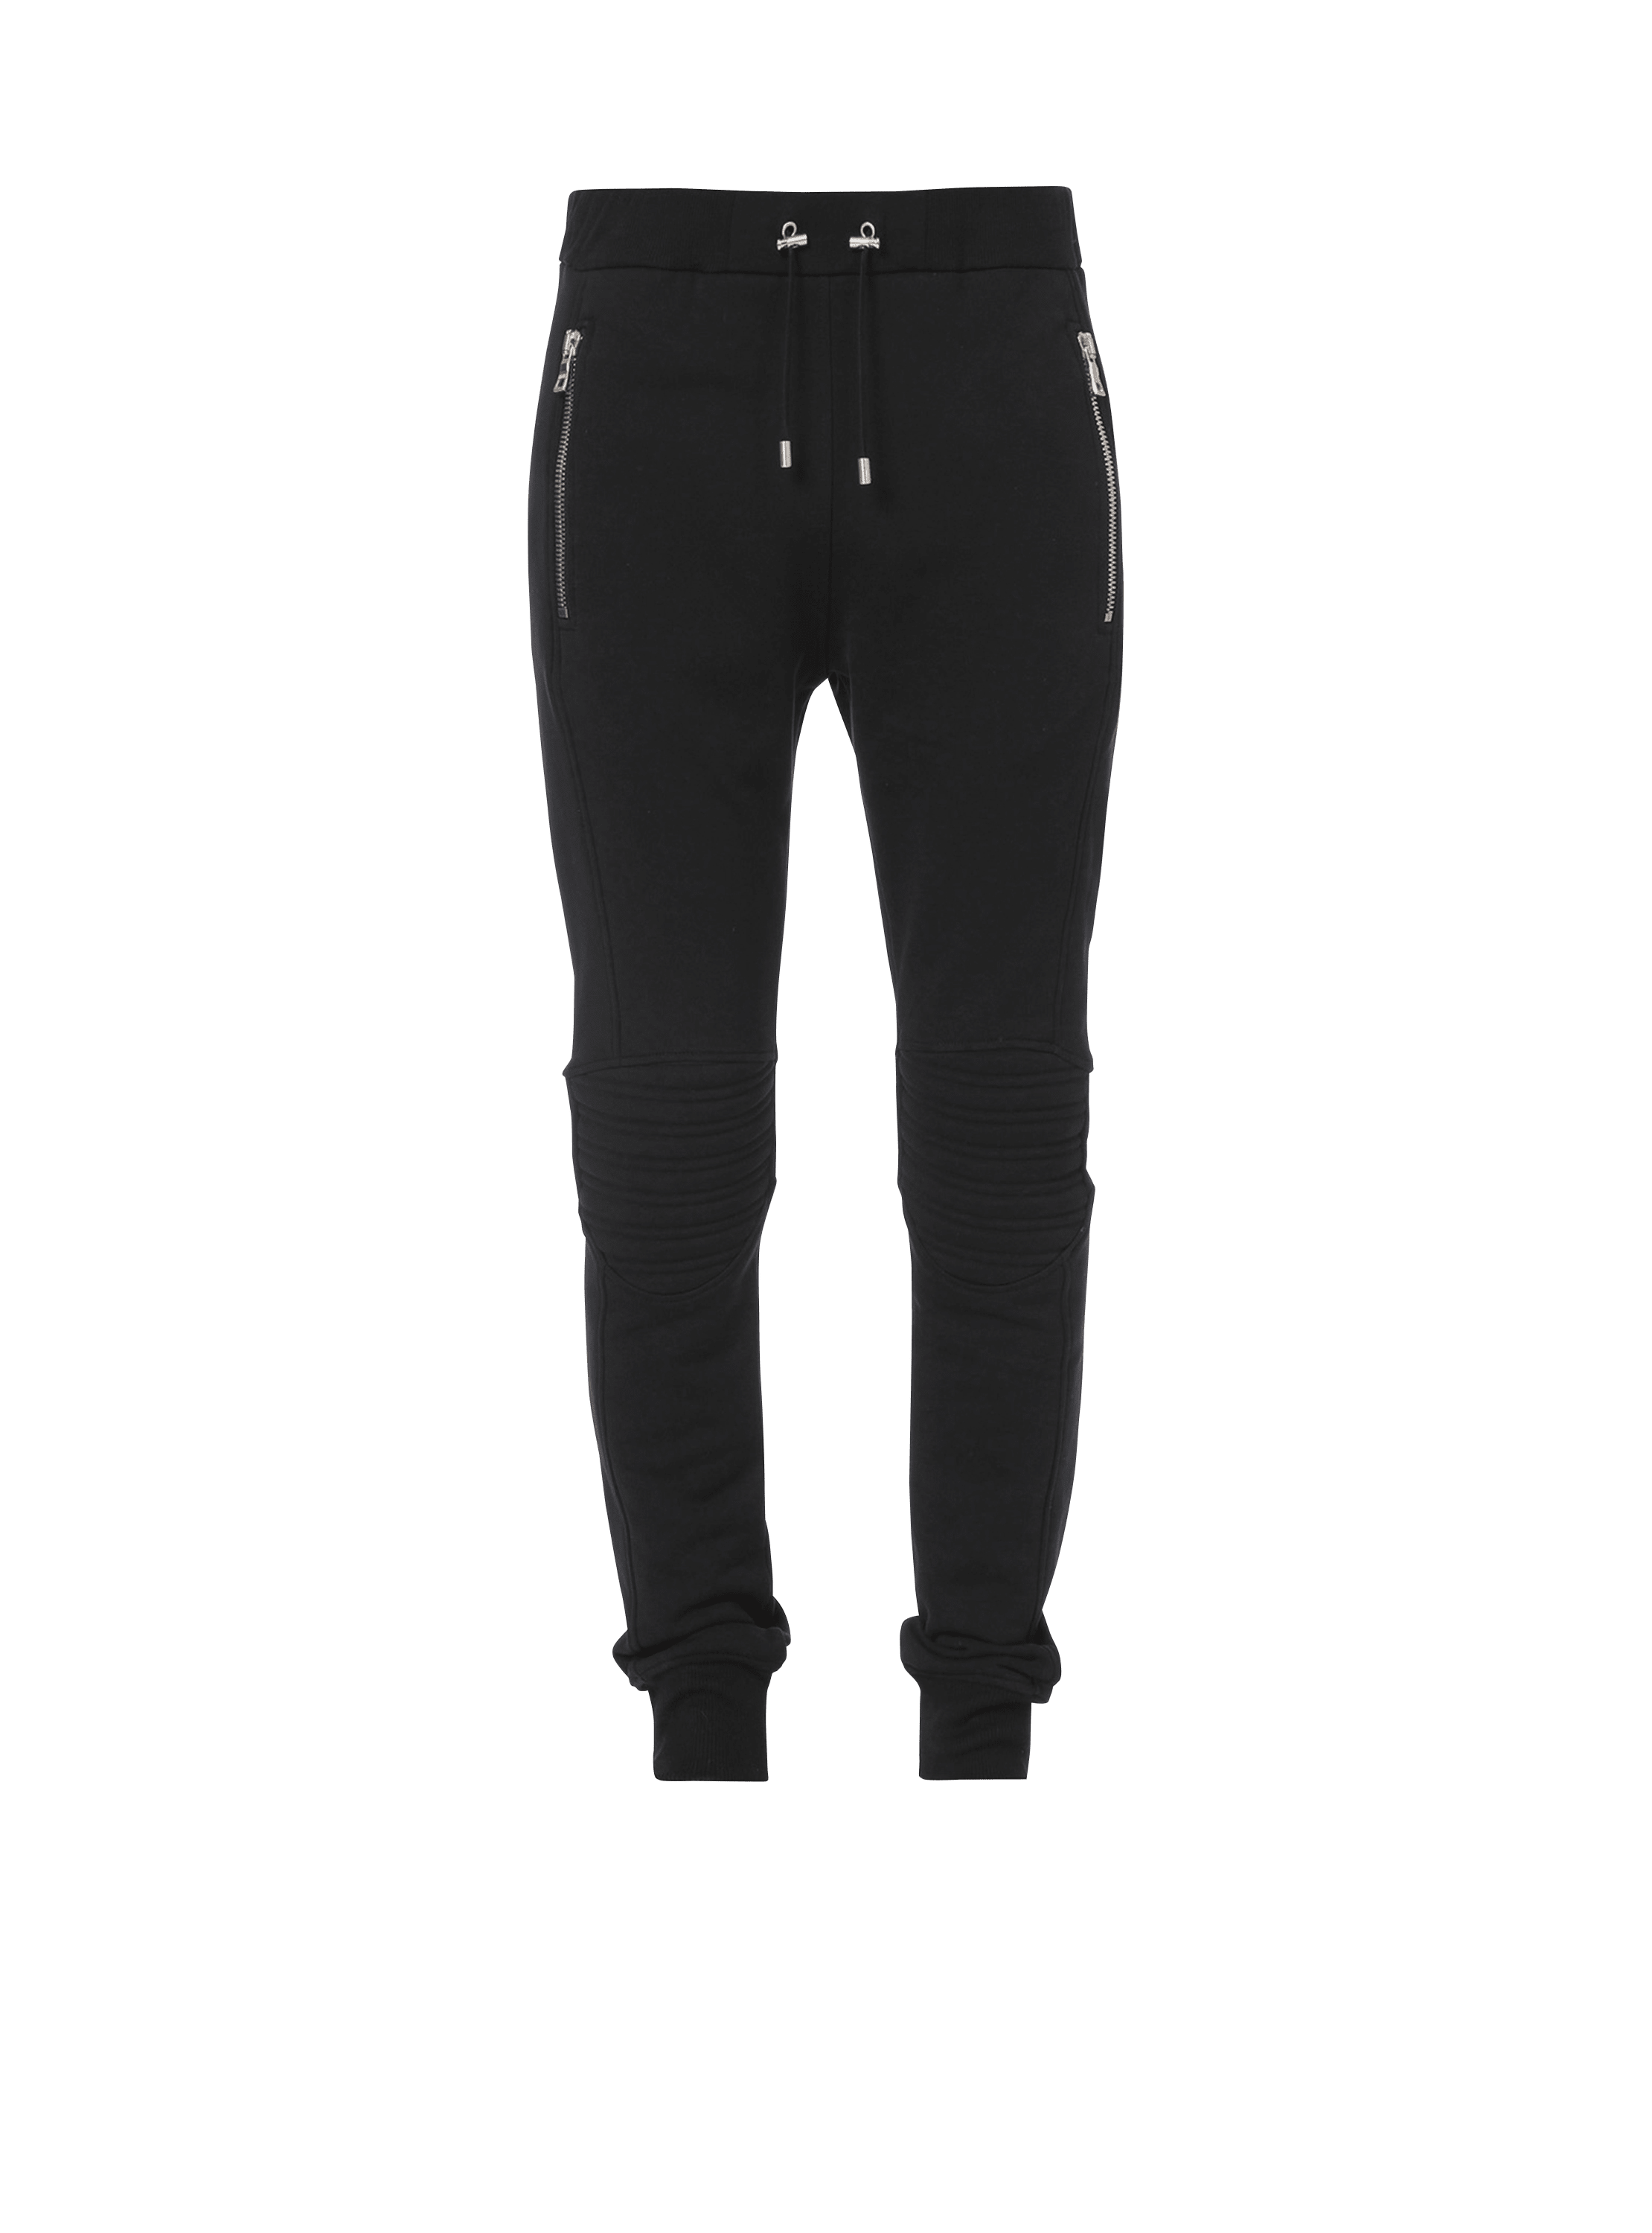 Black cotton sweatpants with embossed Balmain Paris logo